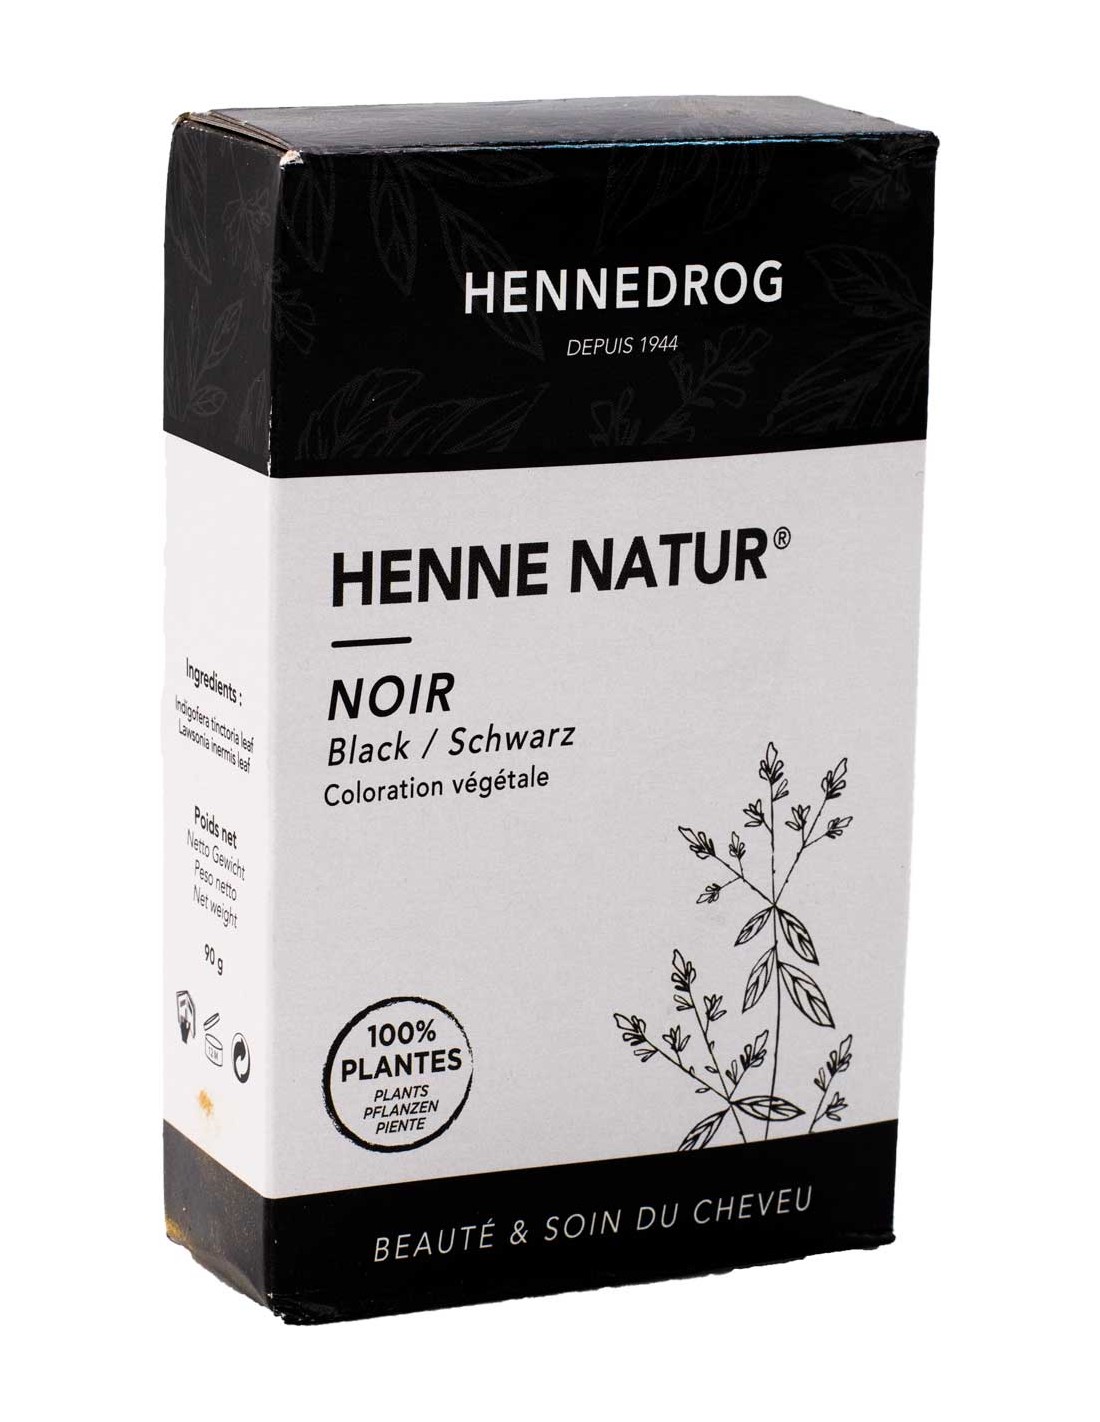 Henné neutre - non colorant - 90g - hennedrog - soin végétal 100% natu